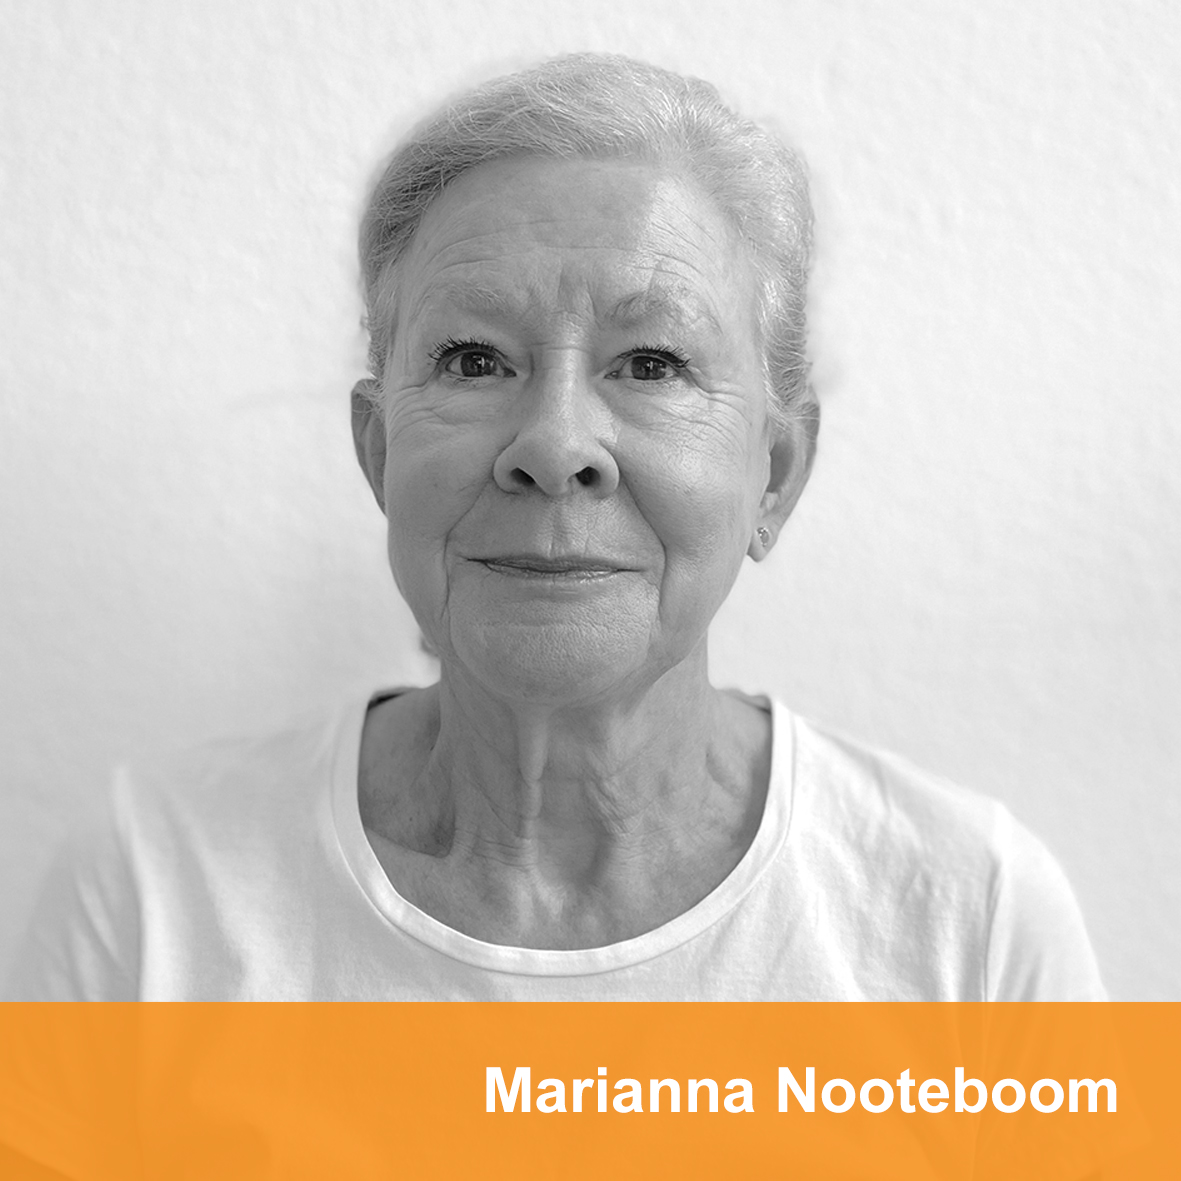 Marianna Nooteboom